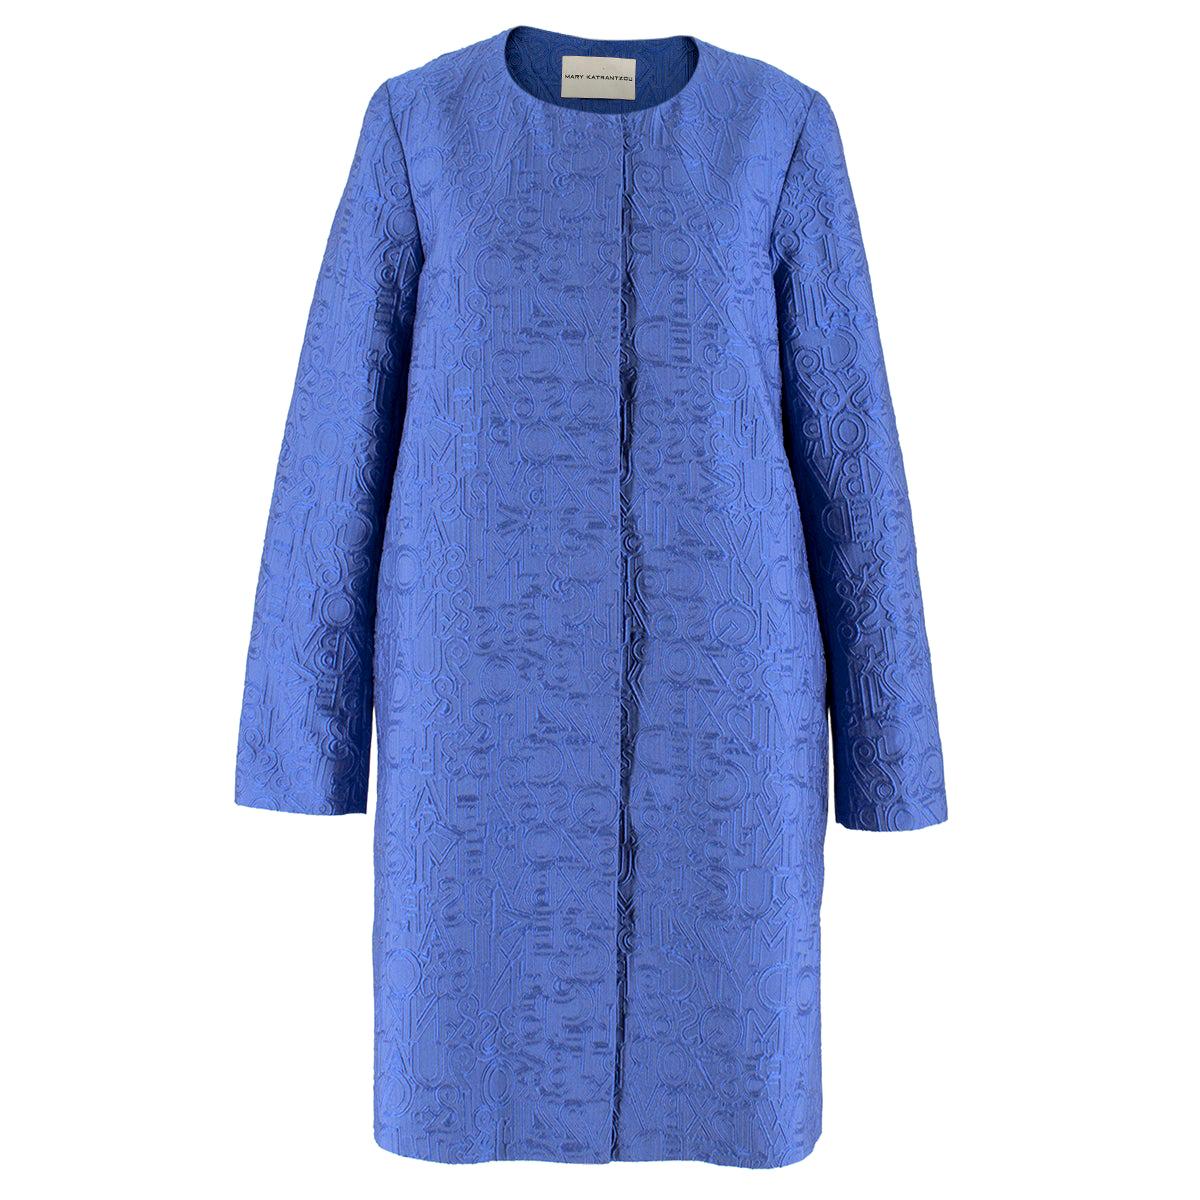 Mary Katrantzou Blue Brocade Twill Coat estimated size S-M For Sale